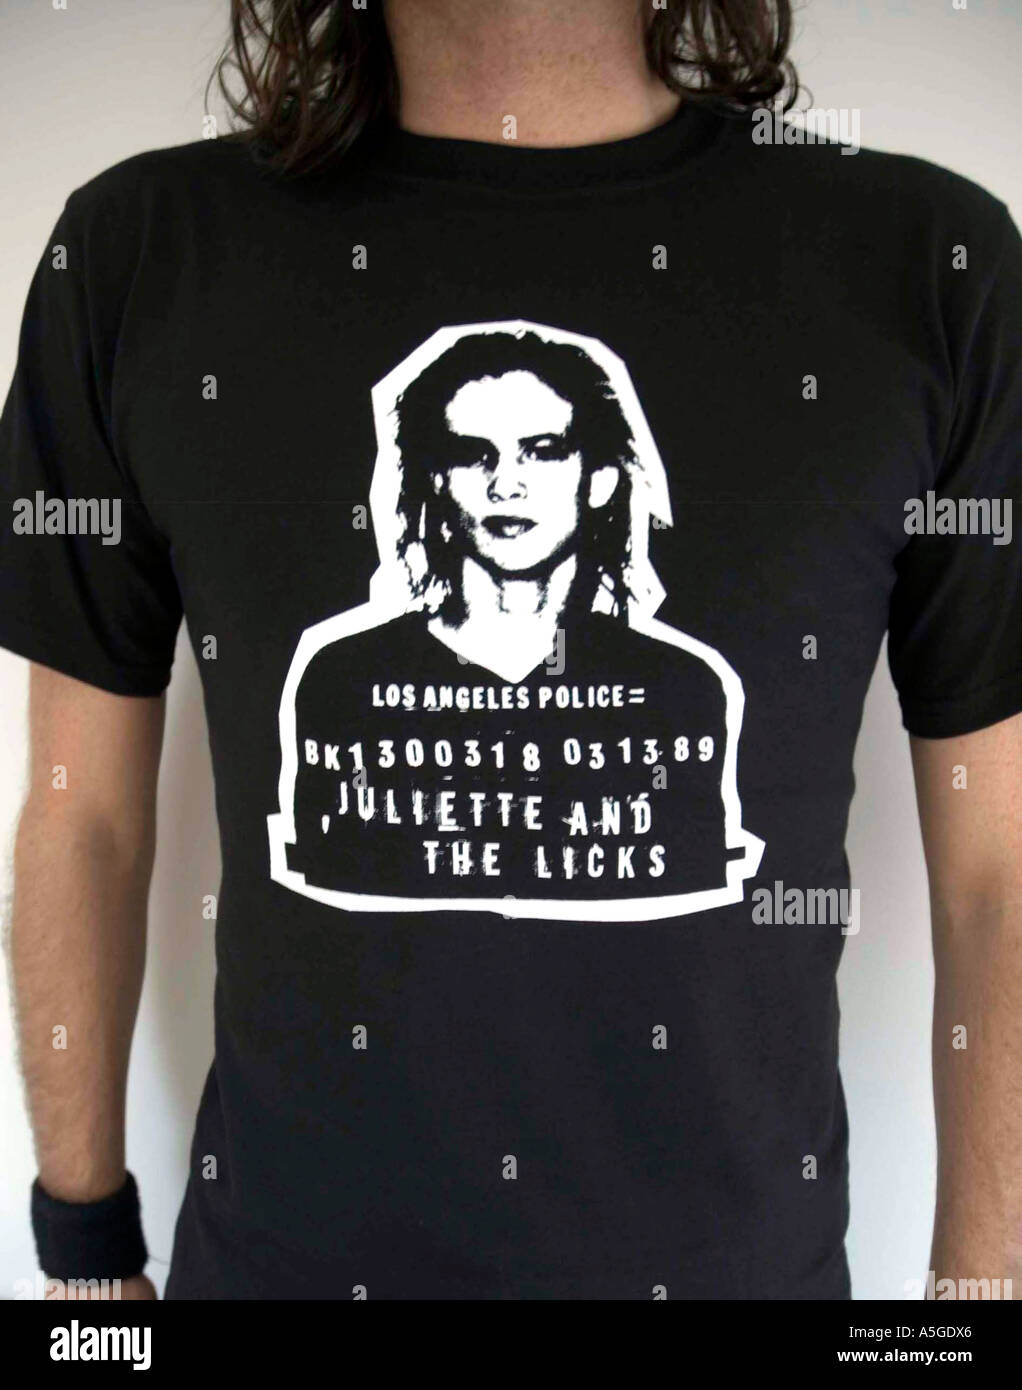 Juliette Lewis e la banda di lecca t shirt Foto stock - Alamy